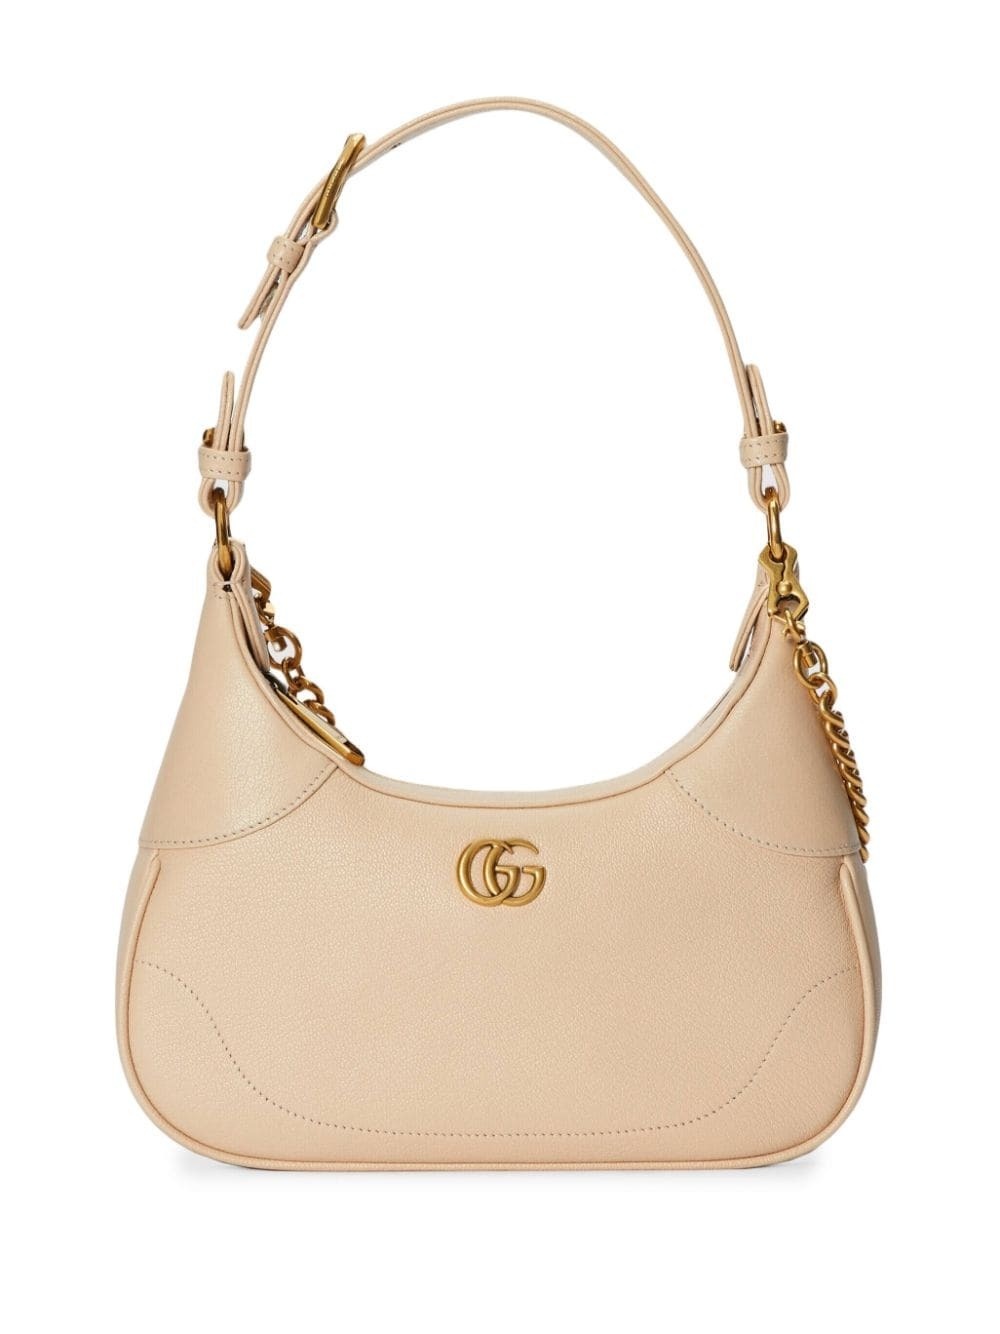 GUCCI - Aphrodite Small Leather Shoulder Bag Gucci